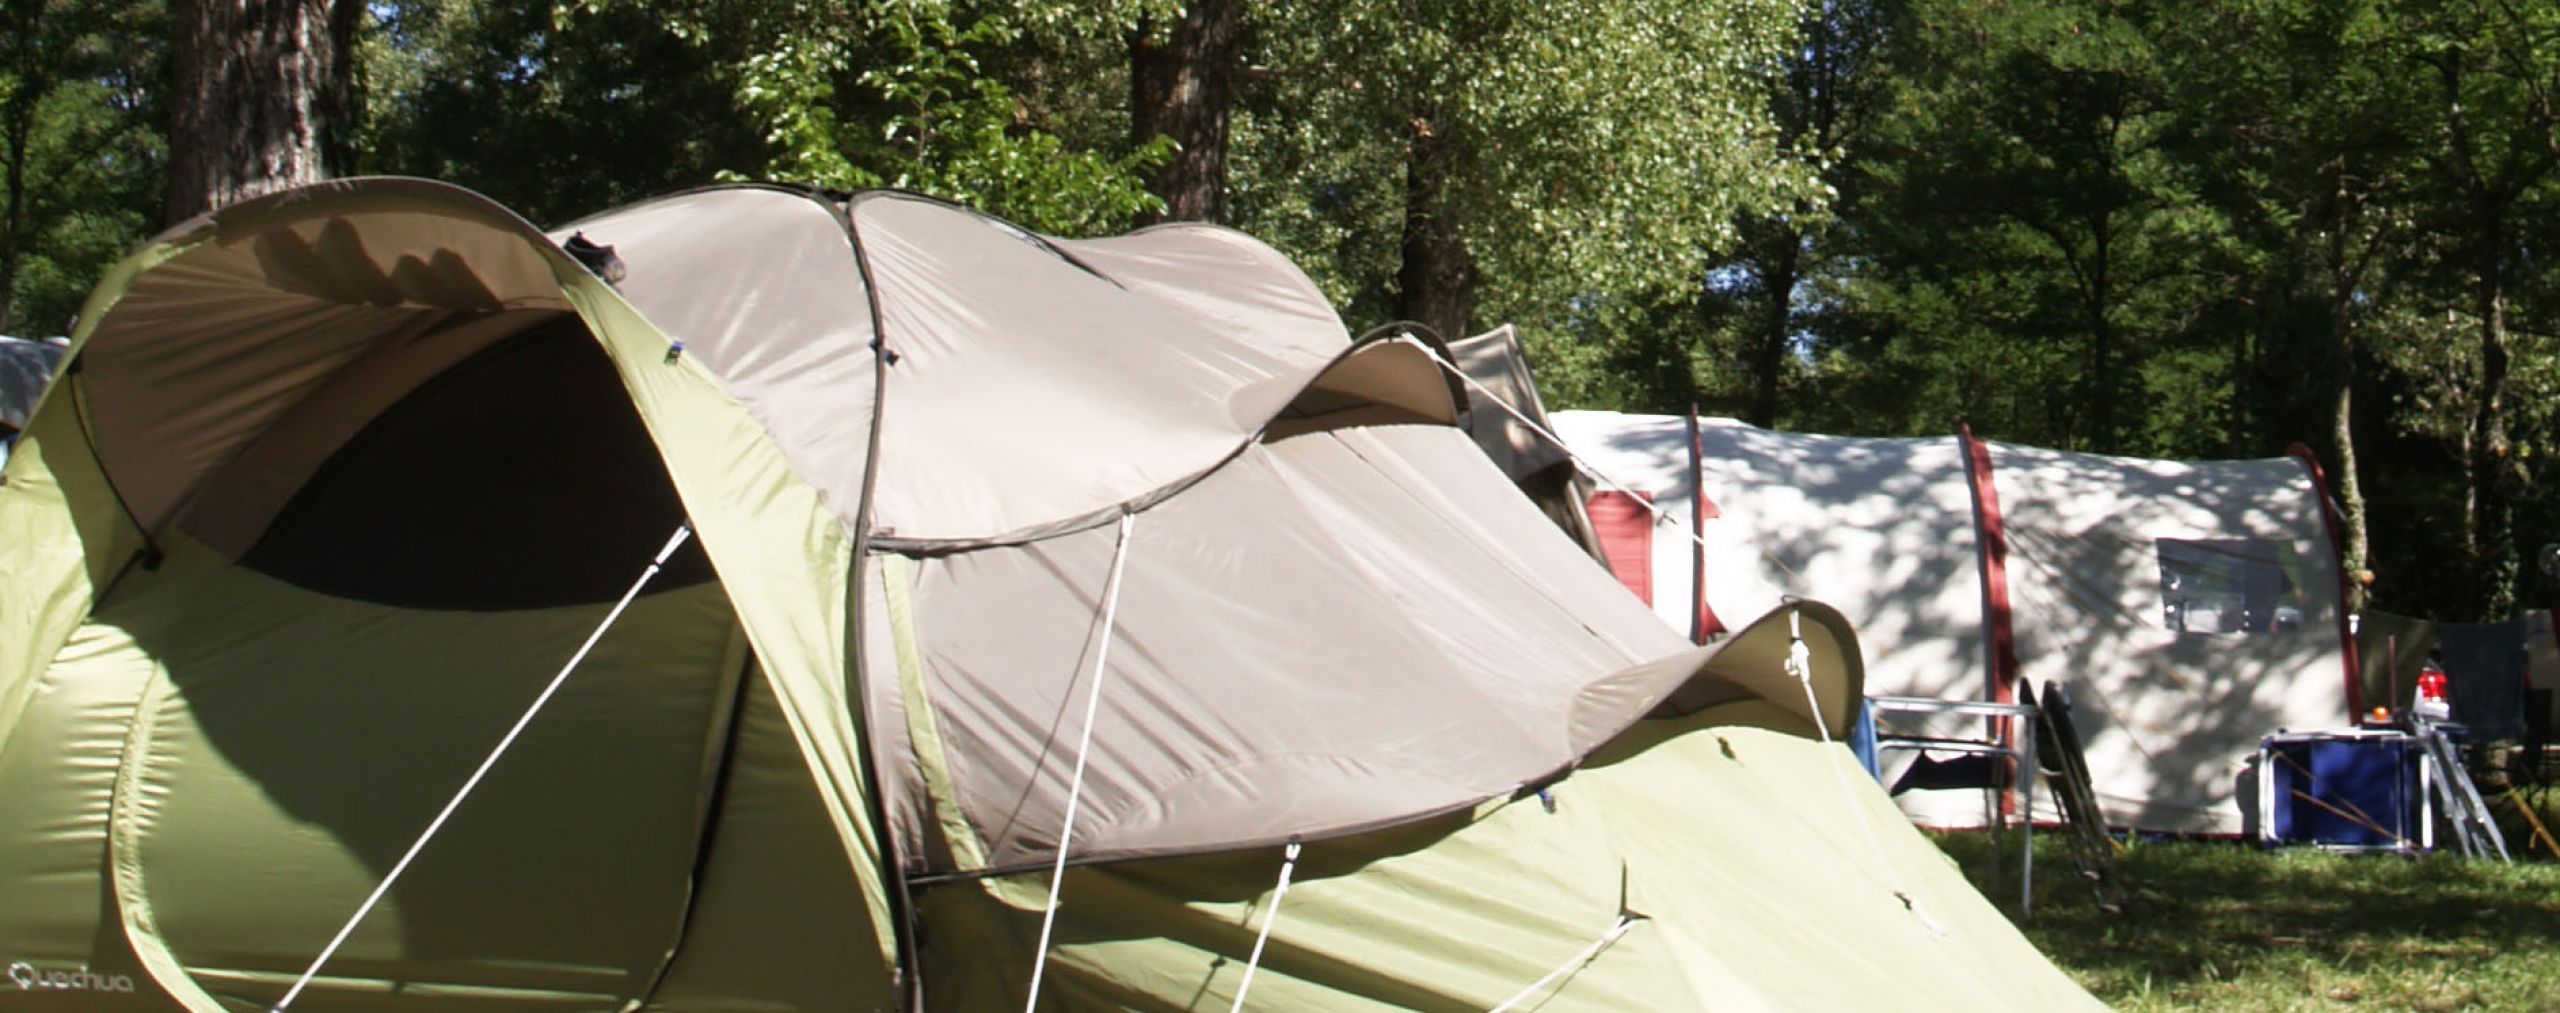 Camping en bordure de rivière en Sud Ardèche